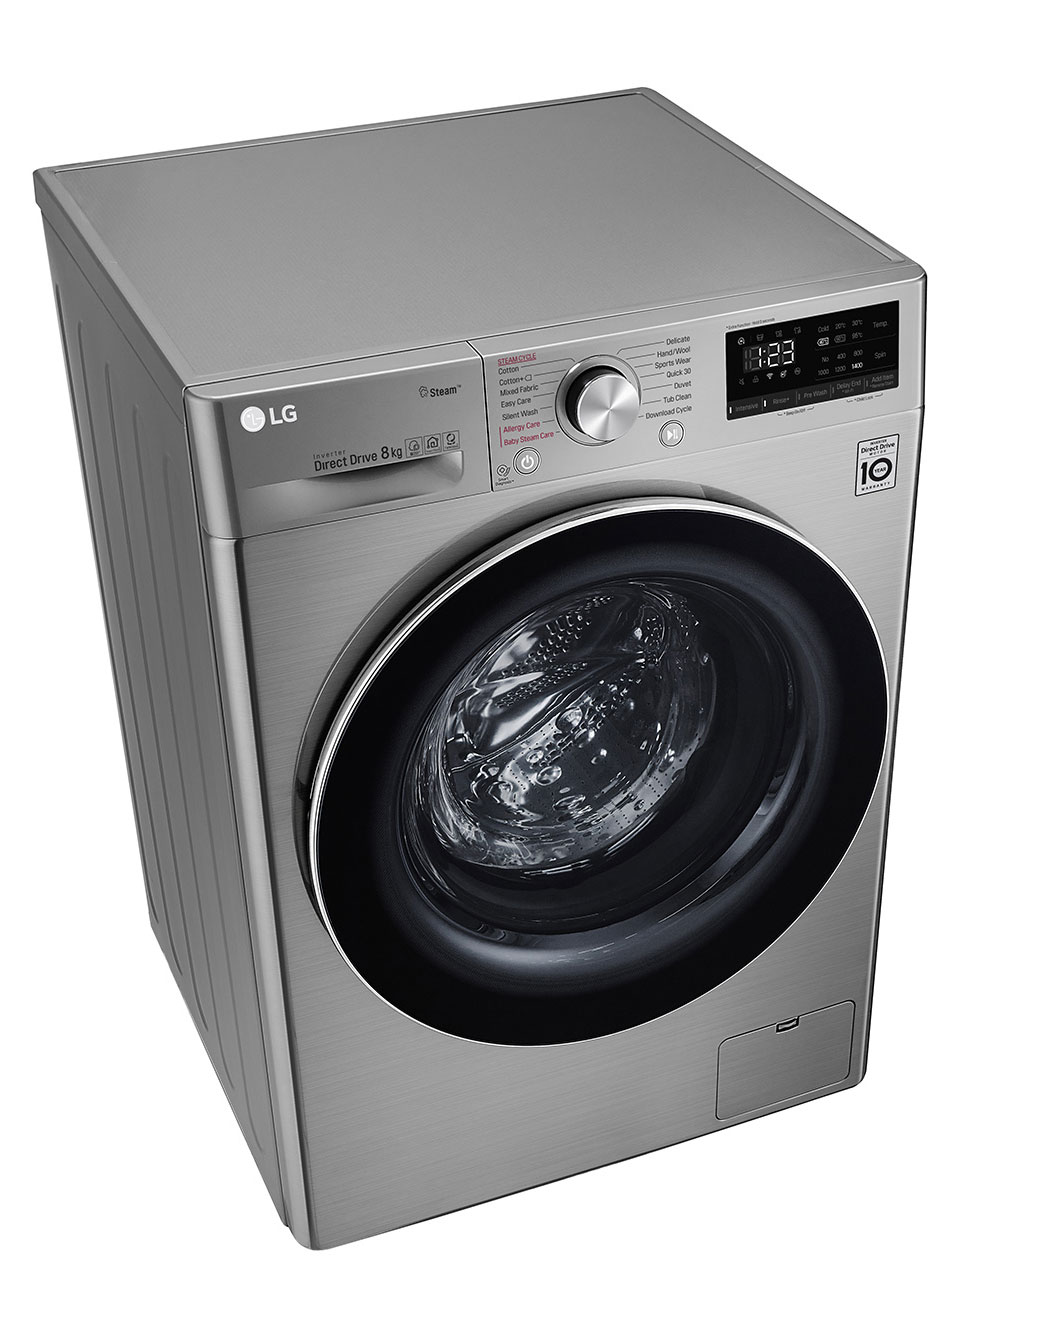 LG washing machine, 8 kg, 1400 cycles, silver